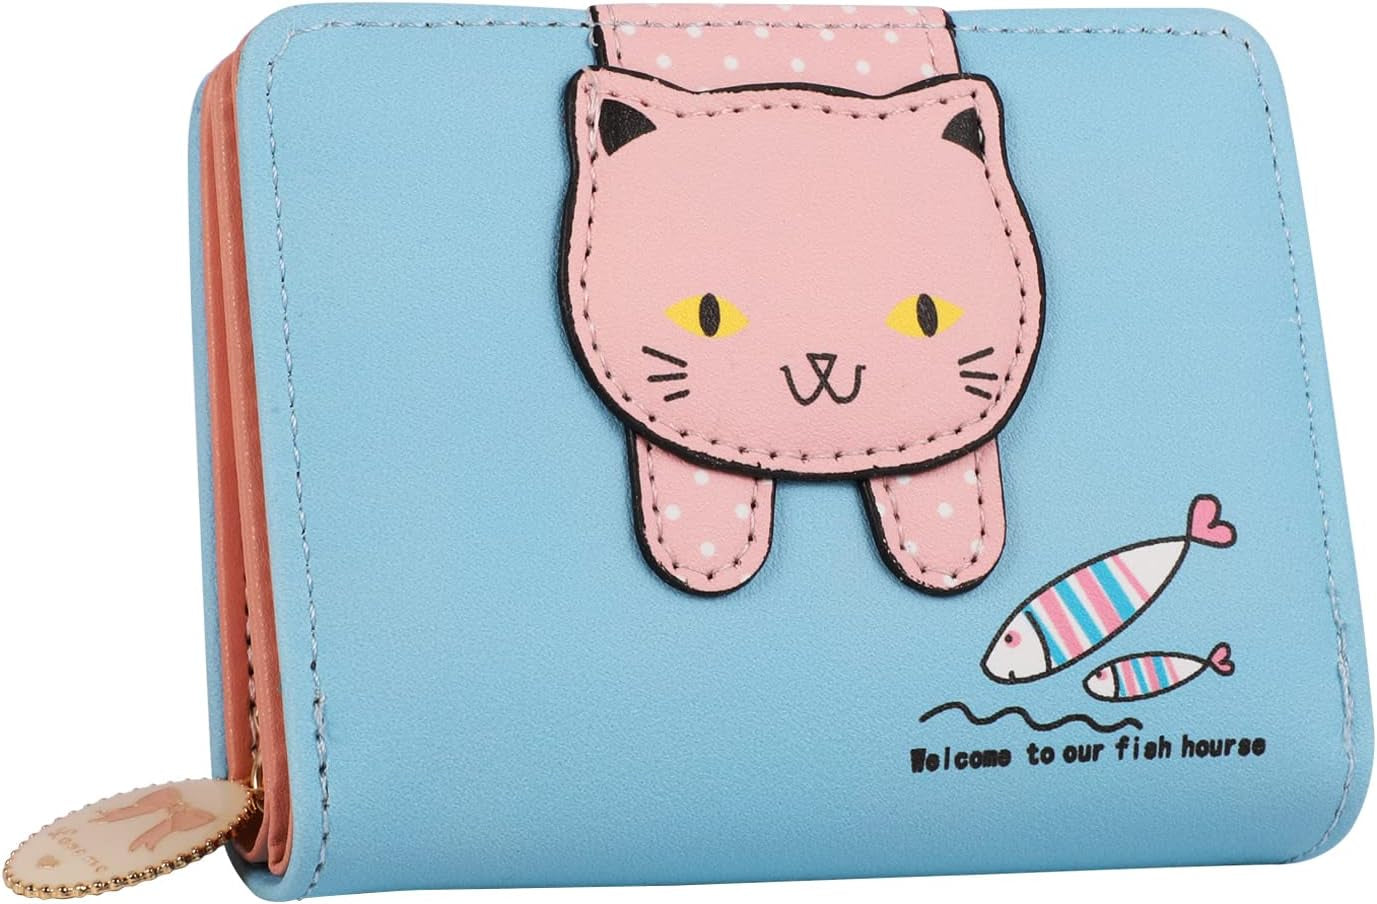 Girls Women Purses, Cute Cat Wallet Small PU Leather Coin Purses with Metal Zipper for Kids Teens Women Gift (Pink)